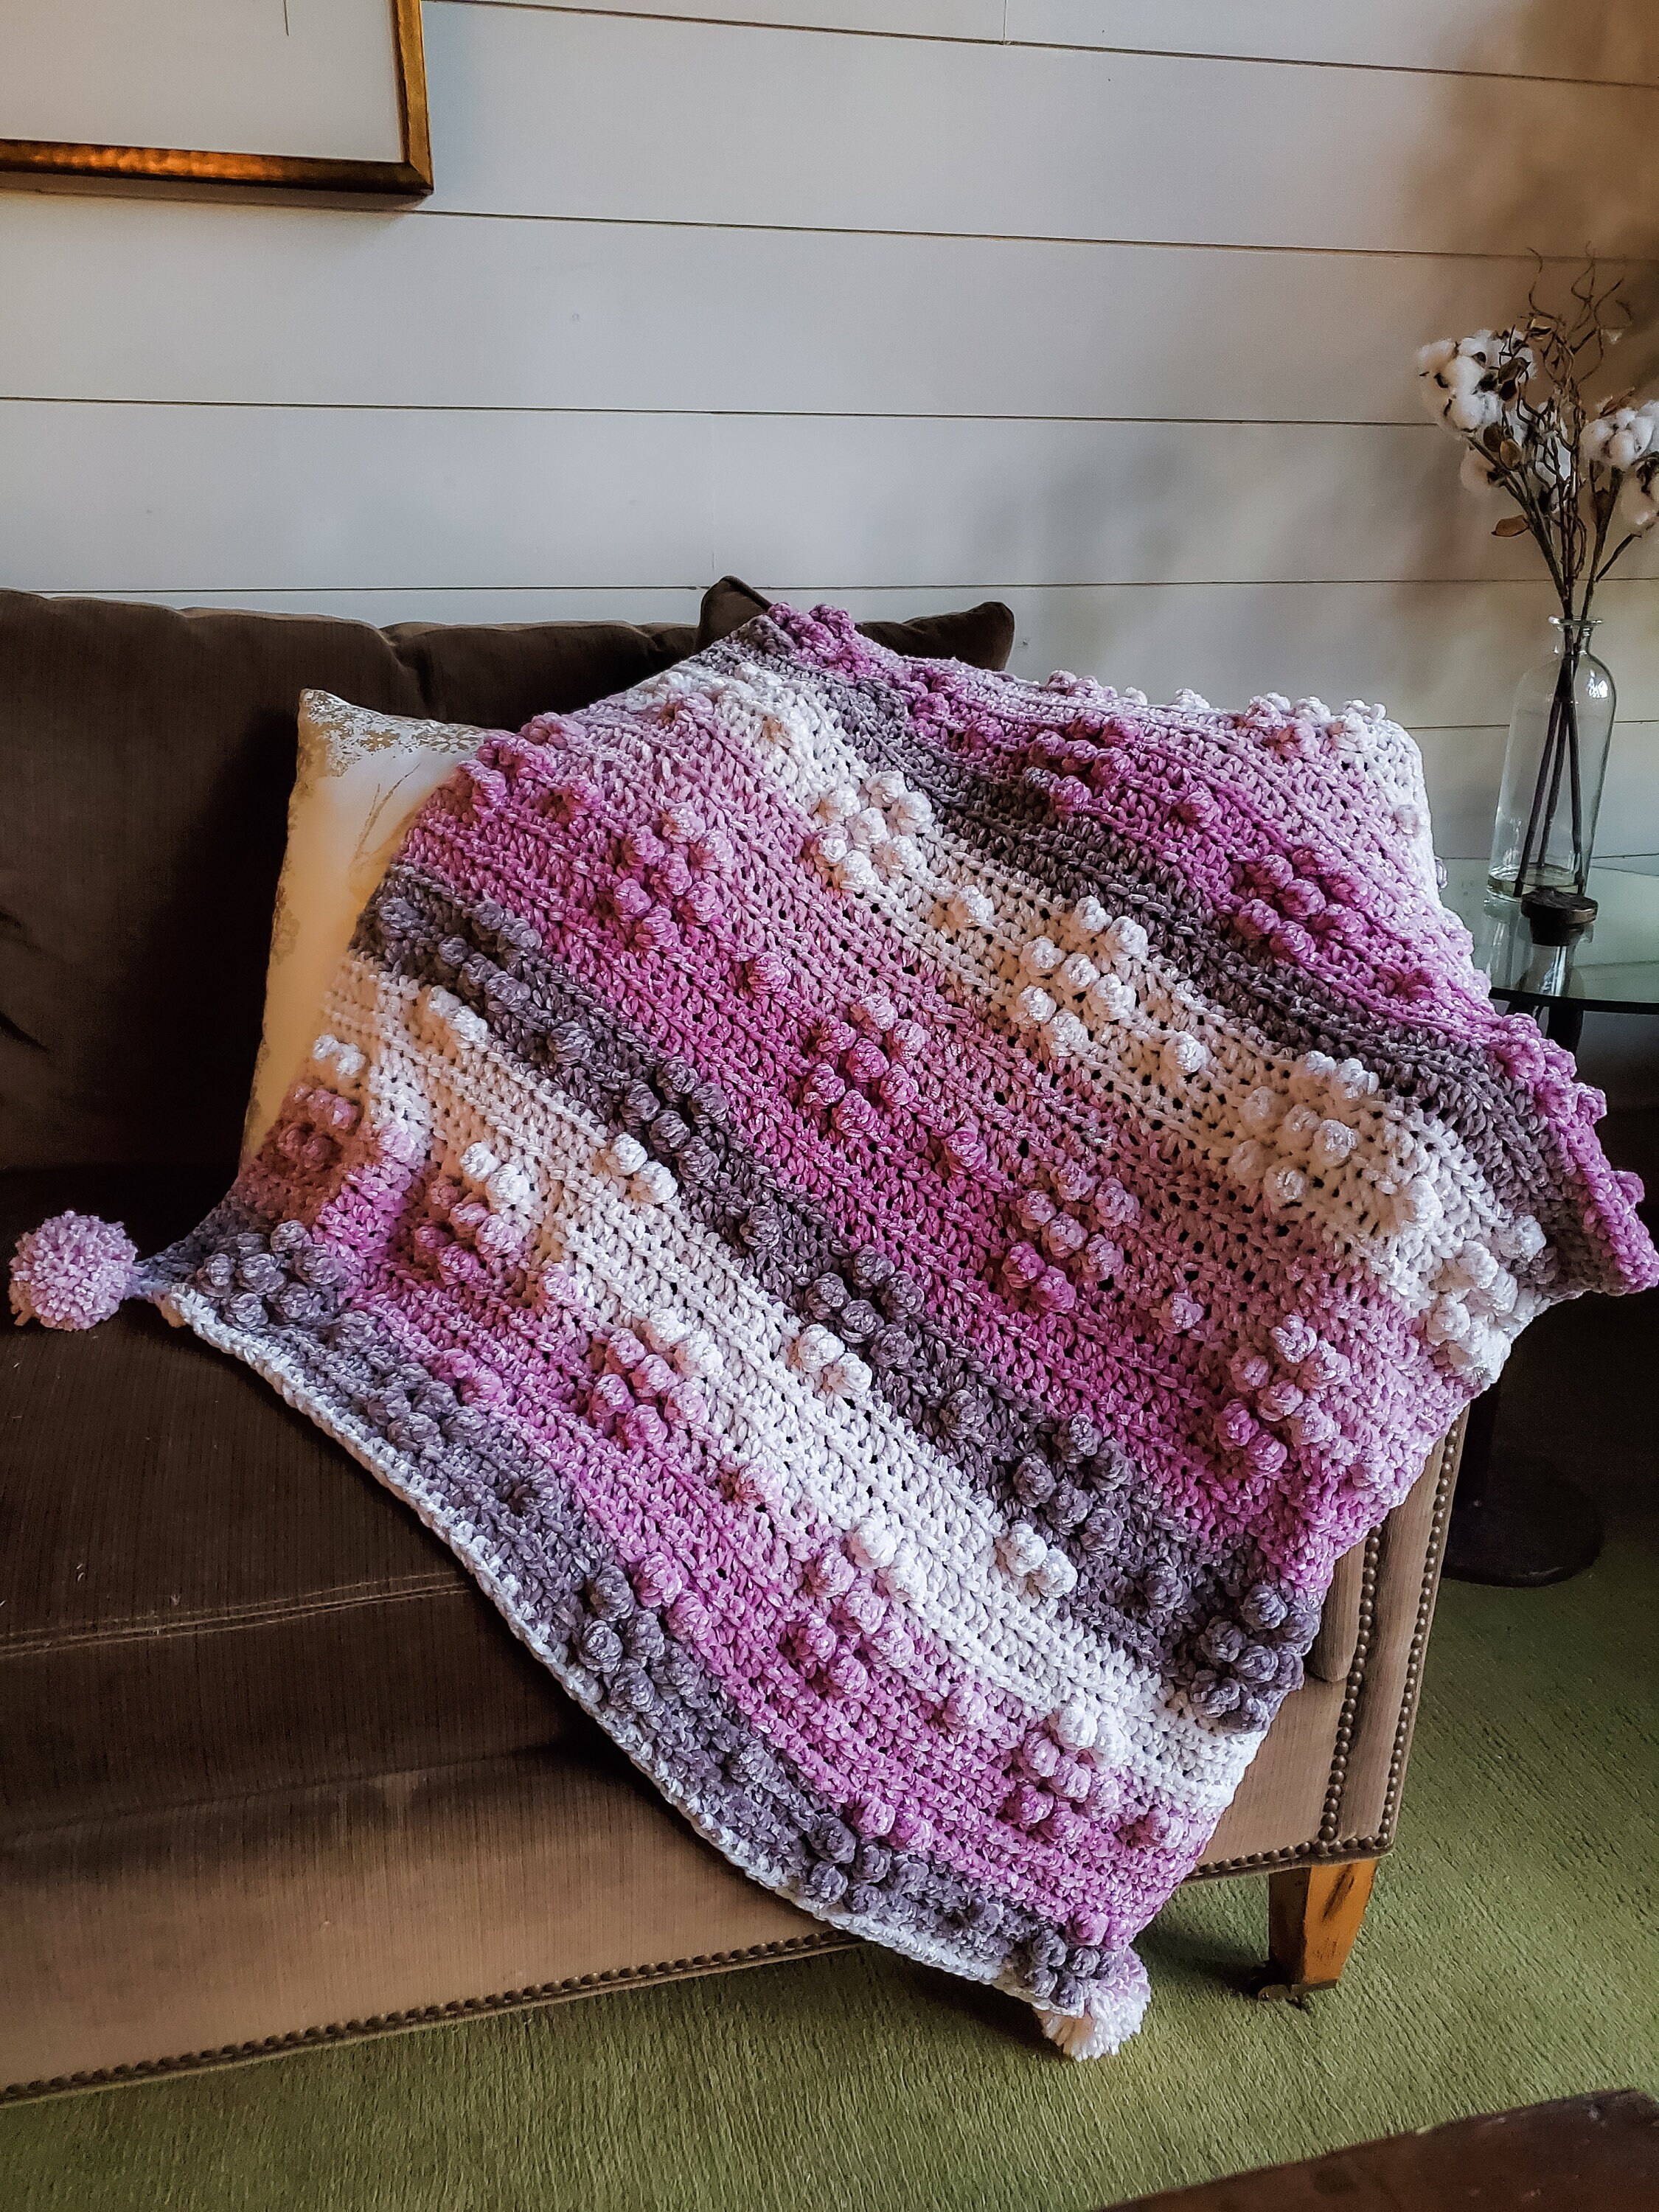 Snuggle Bumps Crochet Baby Blanket Pattern pic